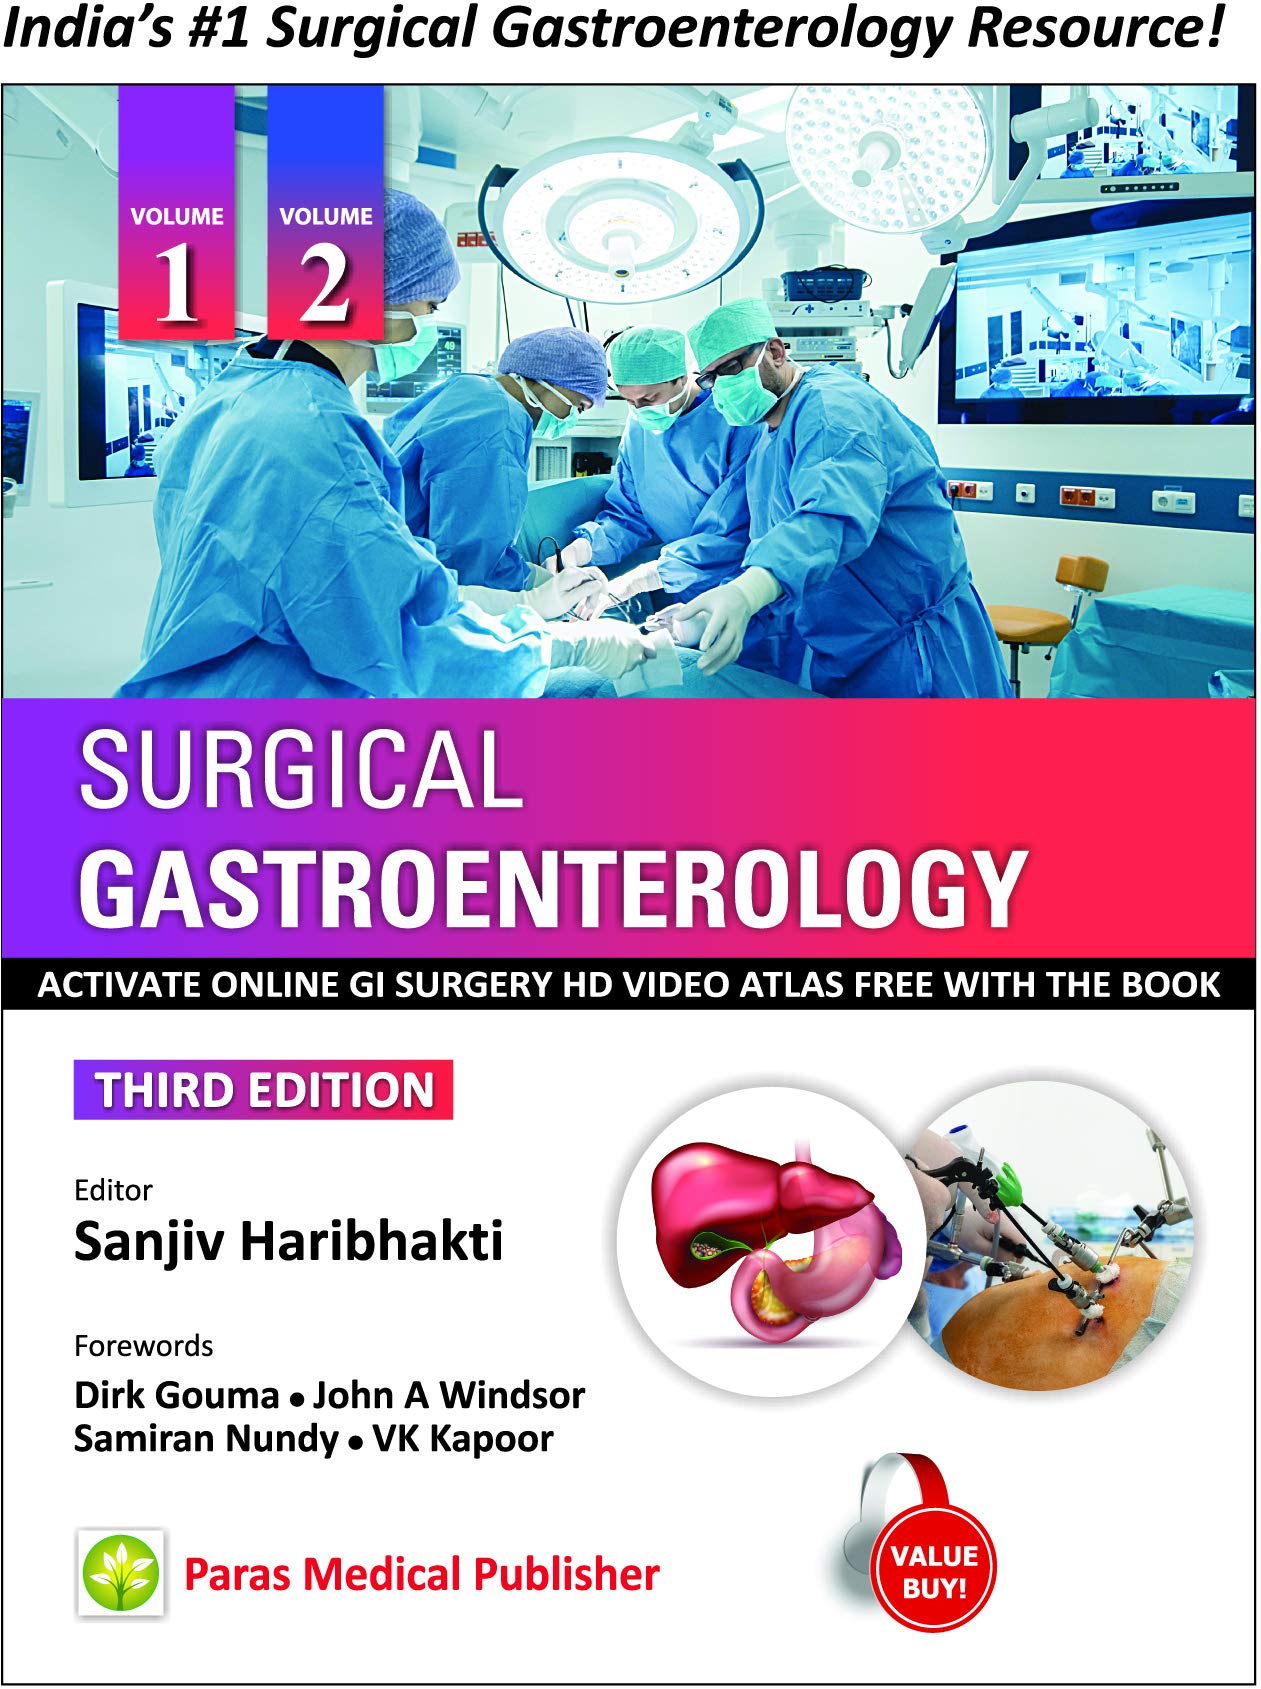 Surgical gastroenterology by Dr. Sanjiv Haribhakti